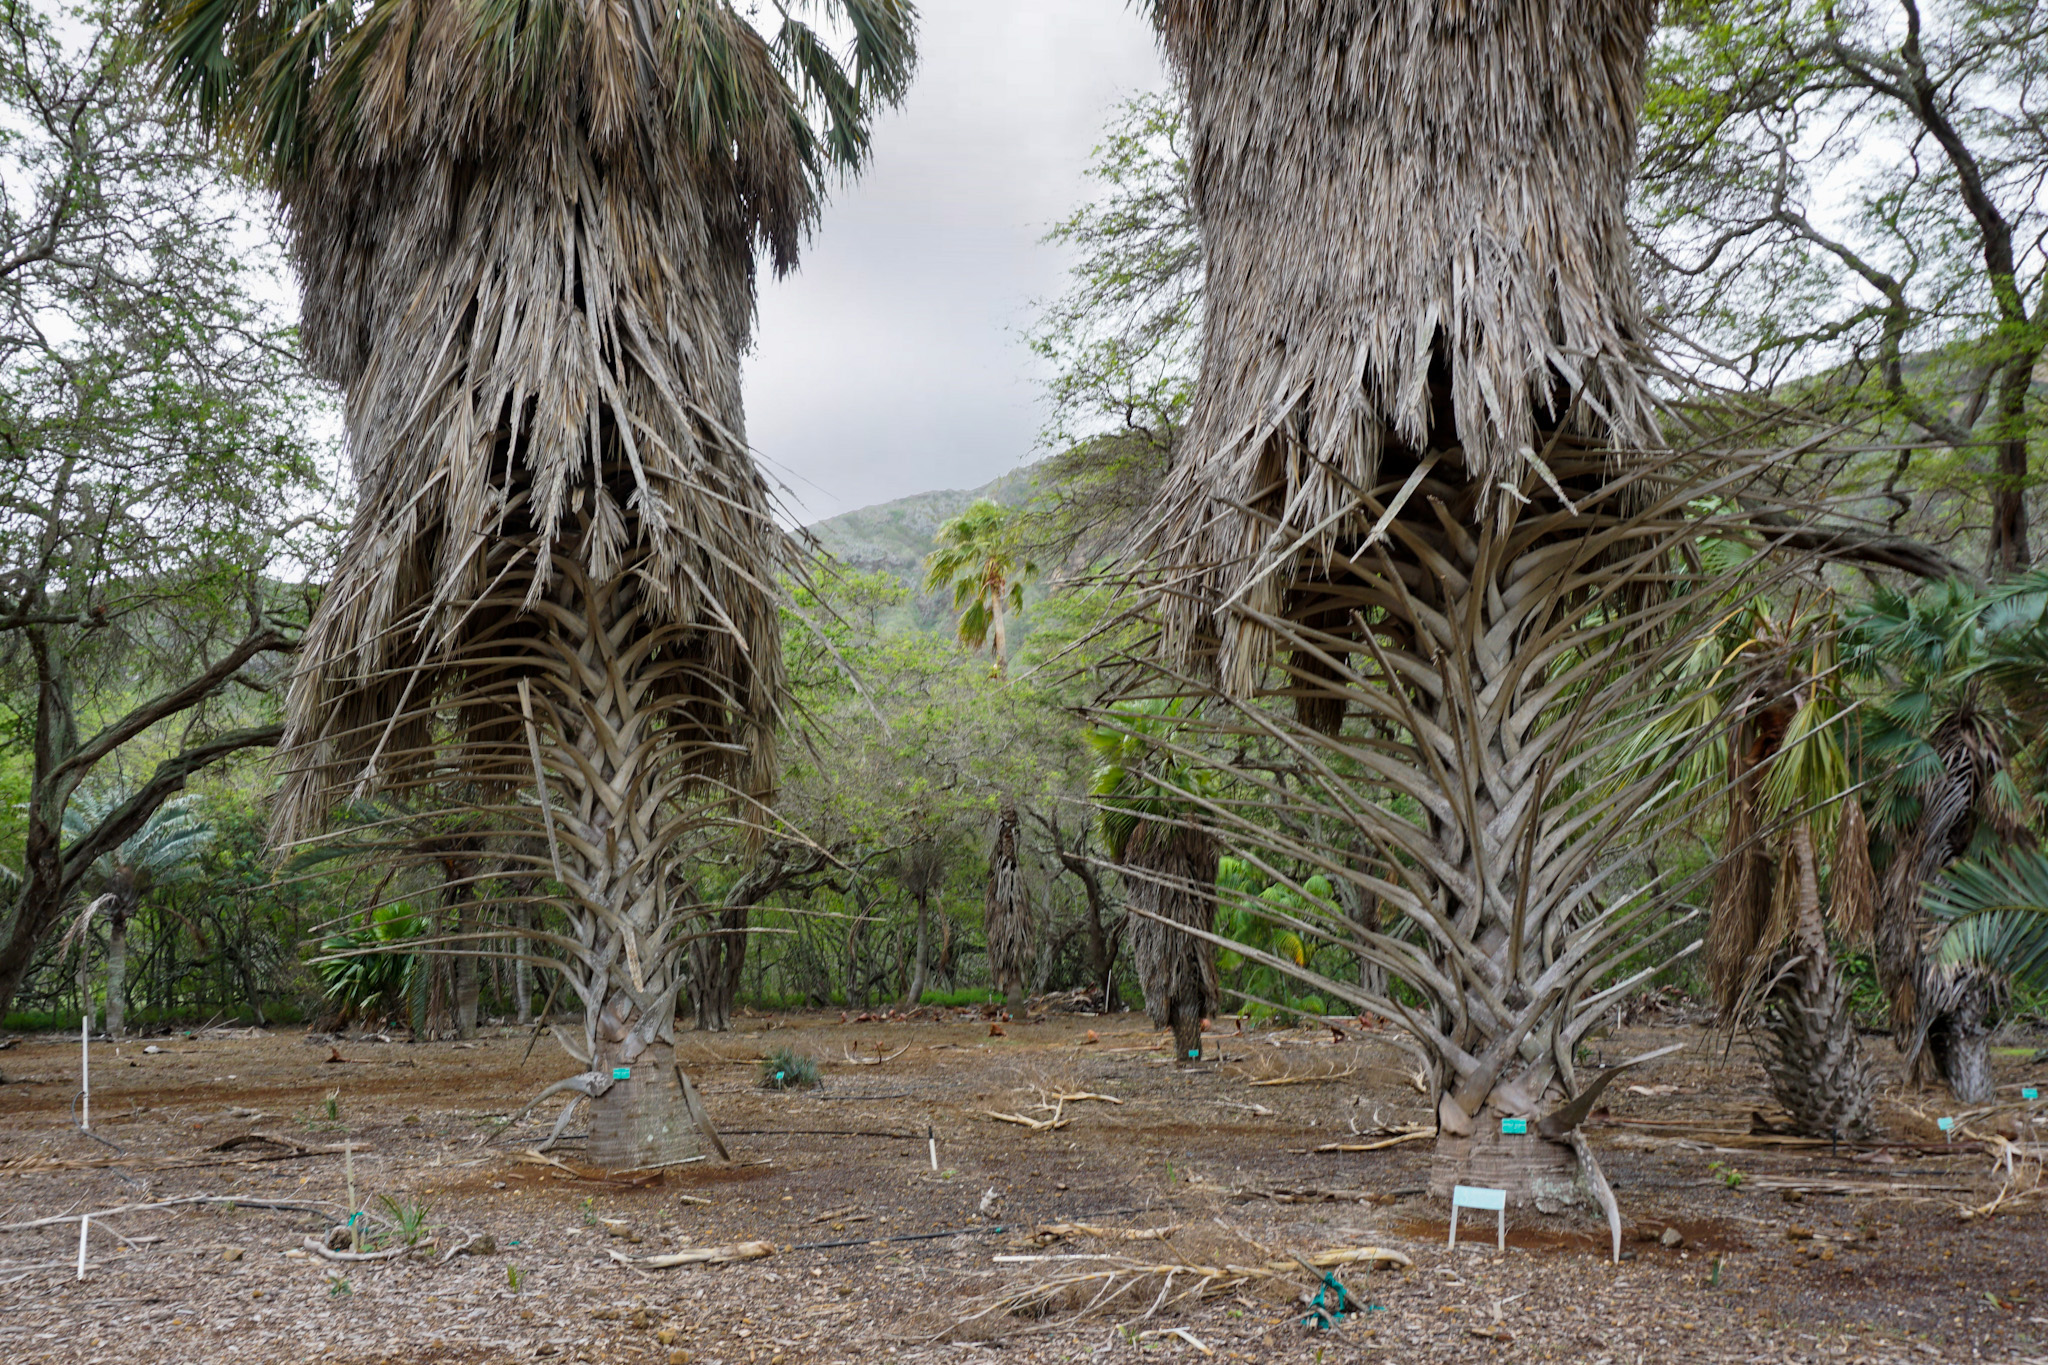 Odd looking palm trees at Koko Botanical Gardens (Oahu)